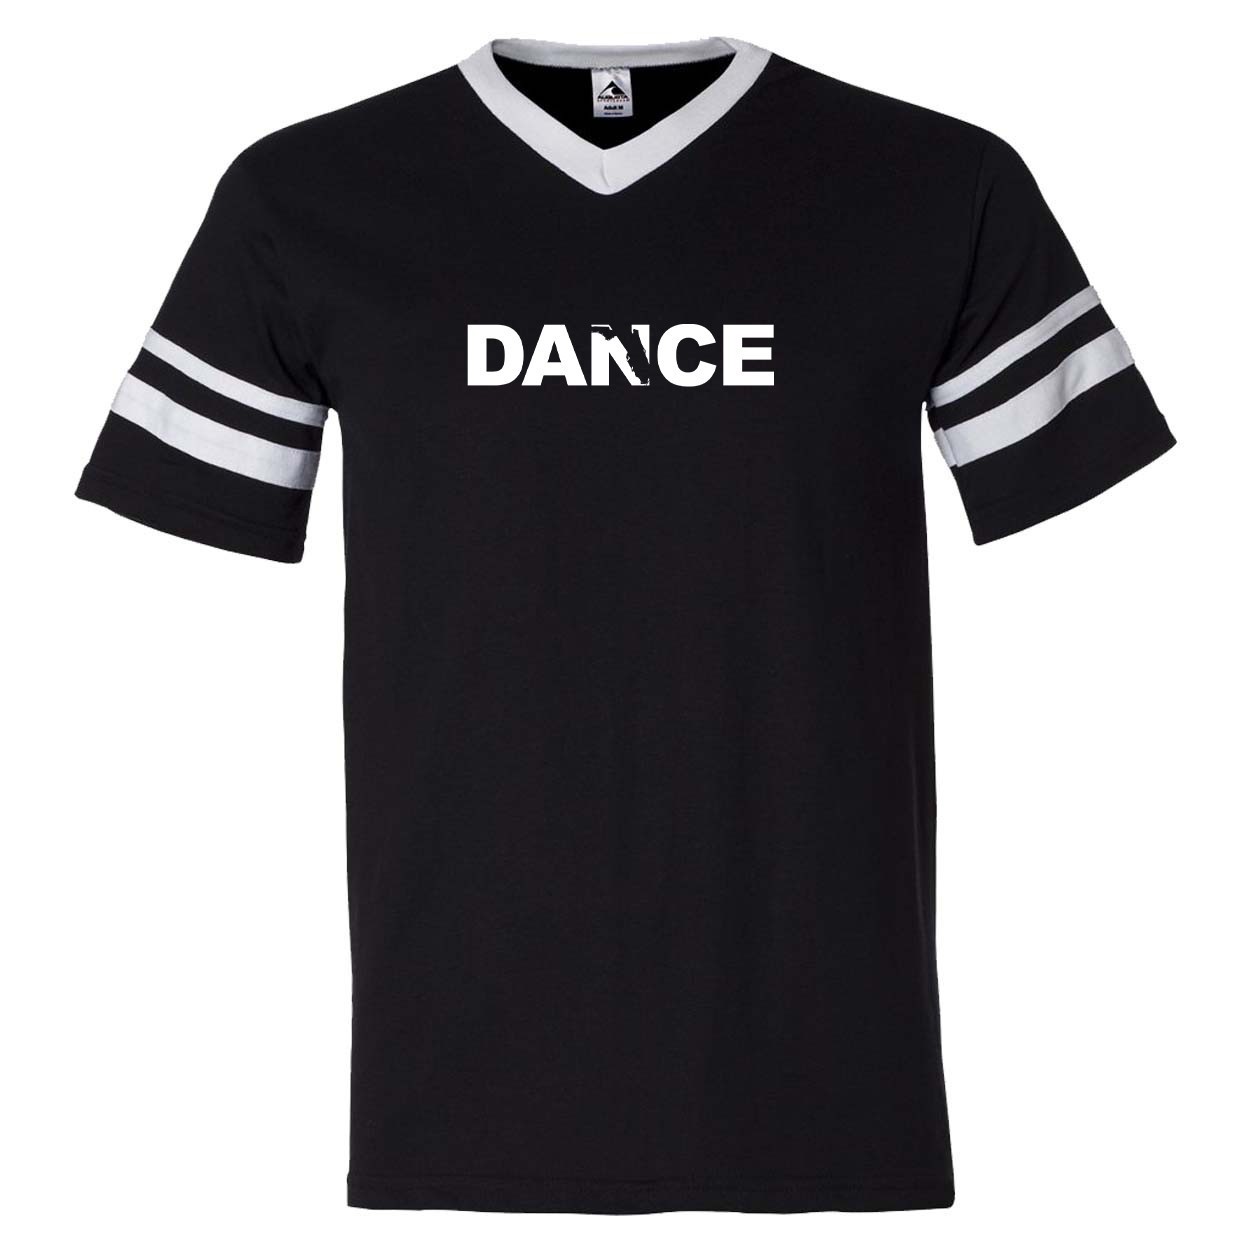 Dance Florida Classic Premium Striped Jersey T-Shirt Black/White (White Logo)